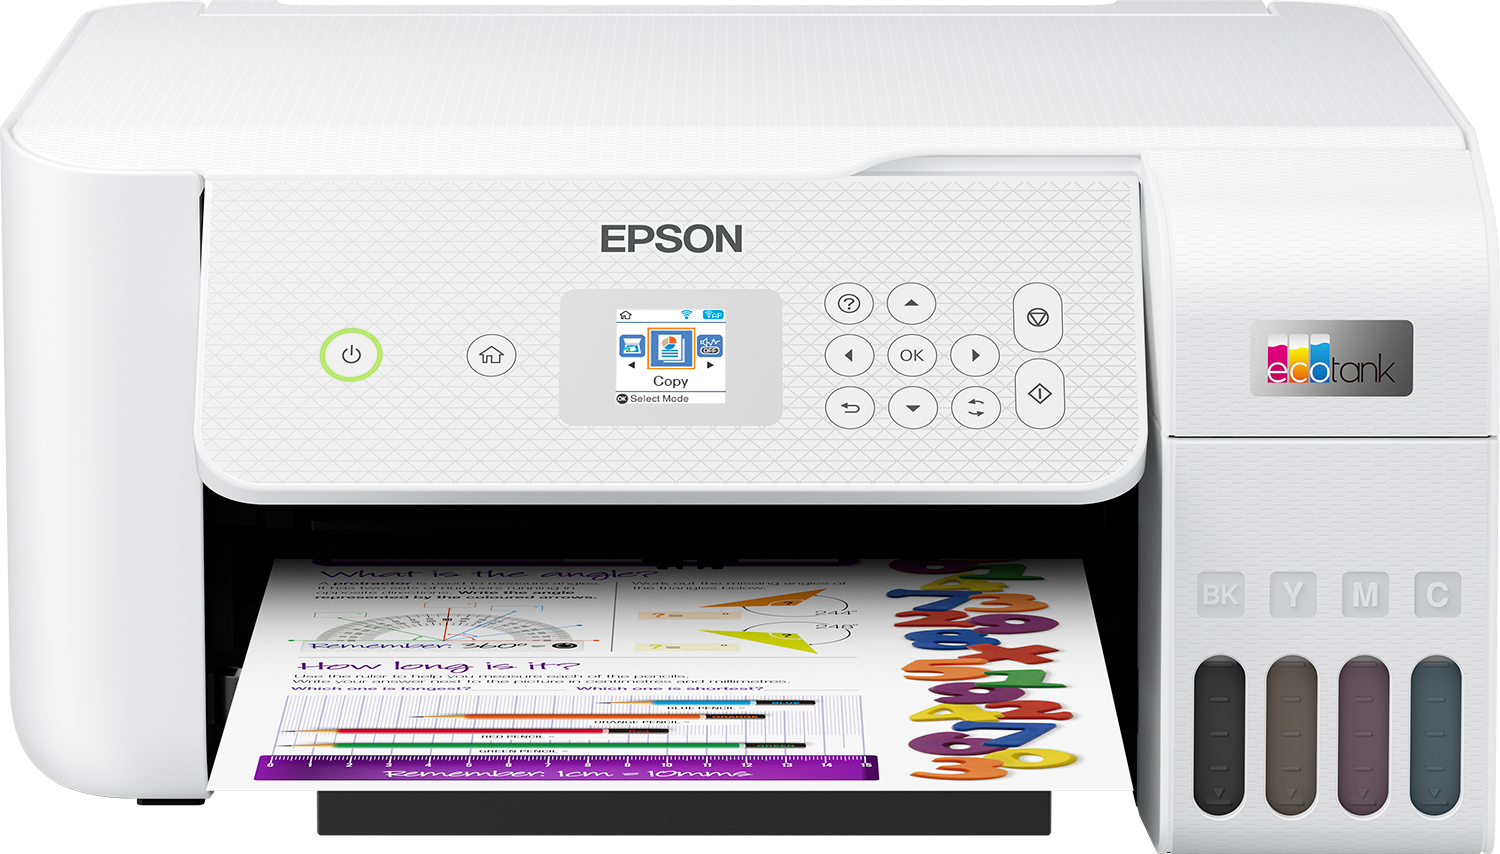 Epson Premium Carta Fotografica A4 per Stampanti Inkjet, 255 g/m², Bianca  Lucida (confezione 15 fogli) - Carta Fotografica